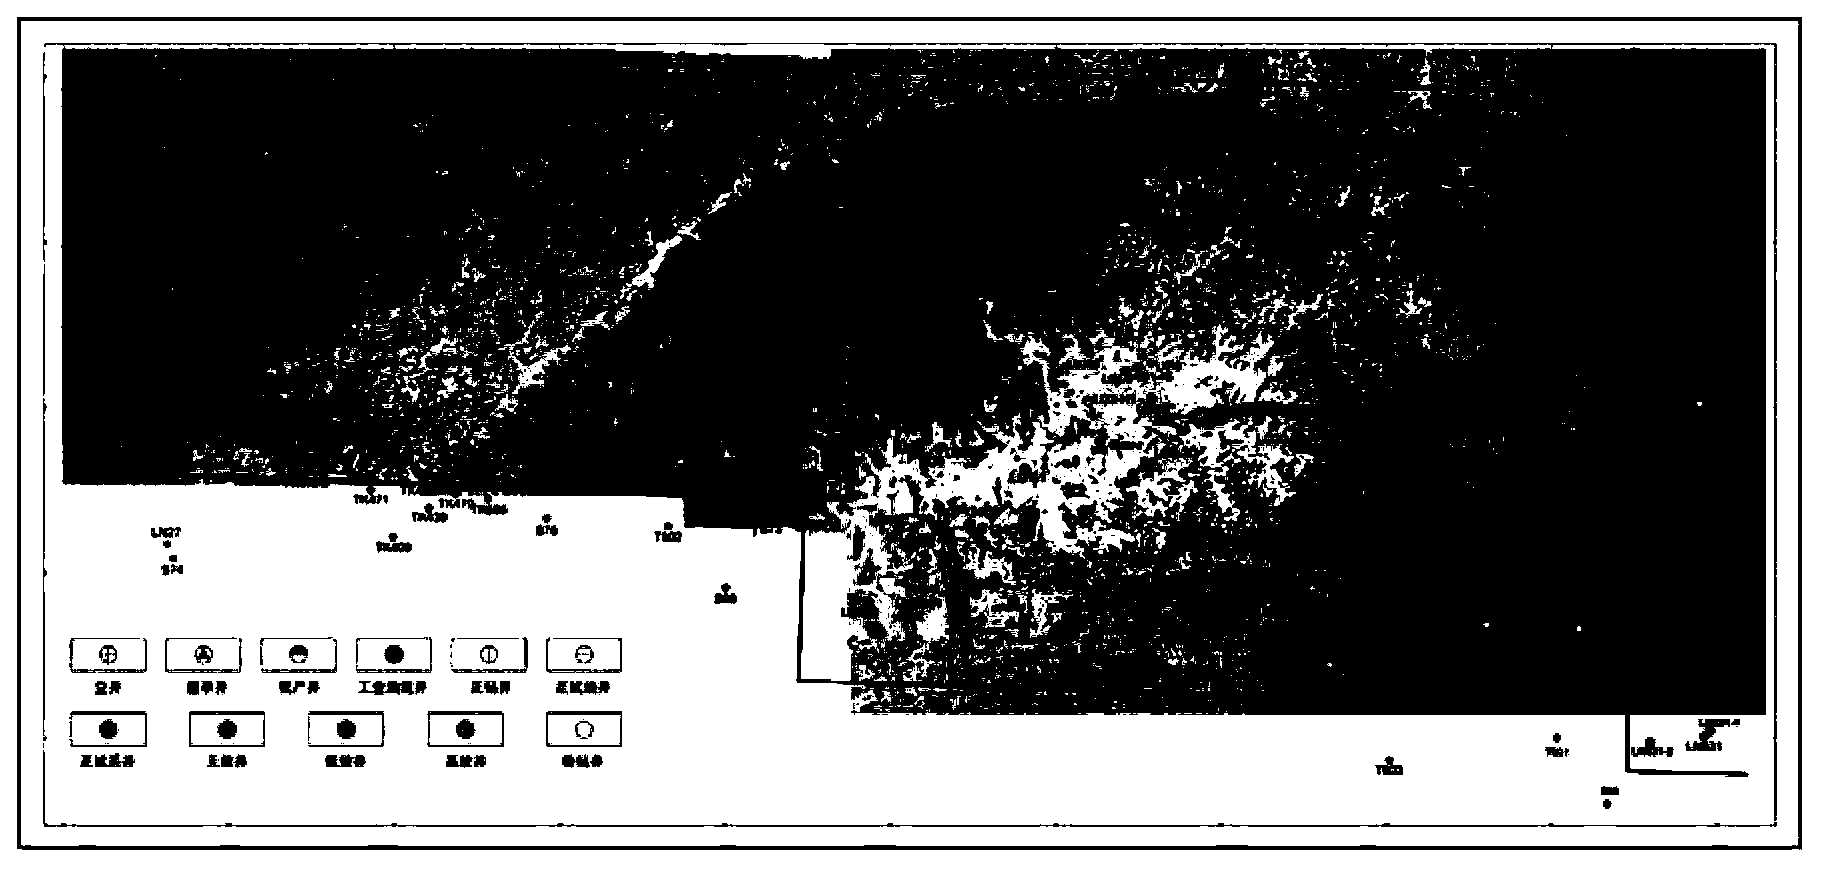 Carbonate rock buried hill cave layered interpretation method